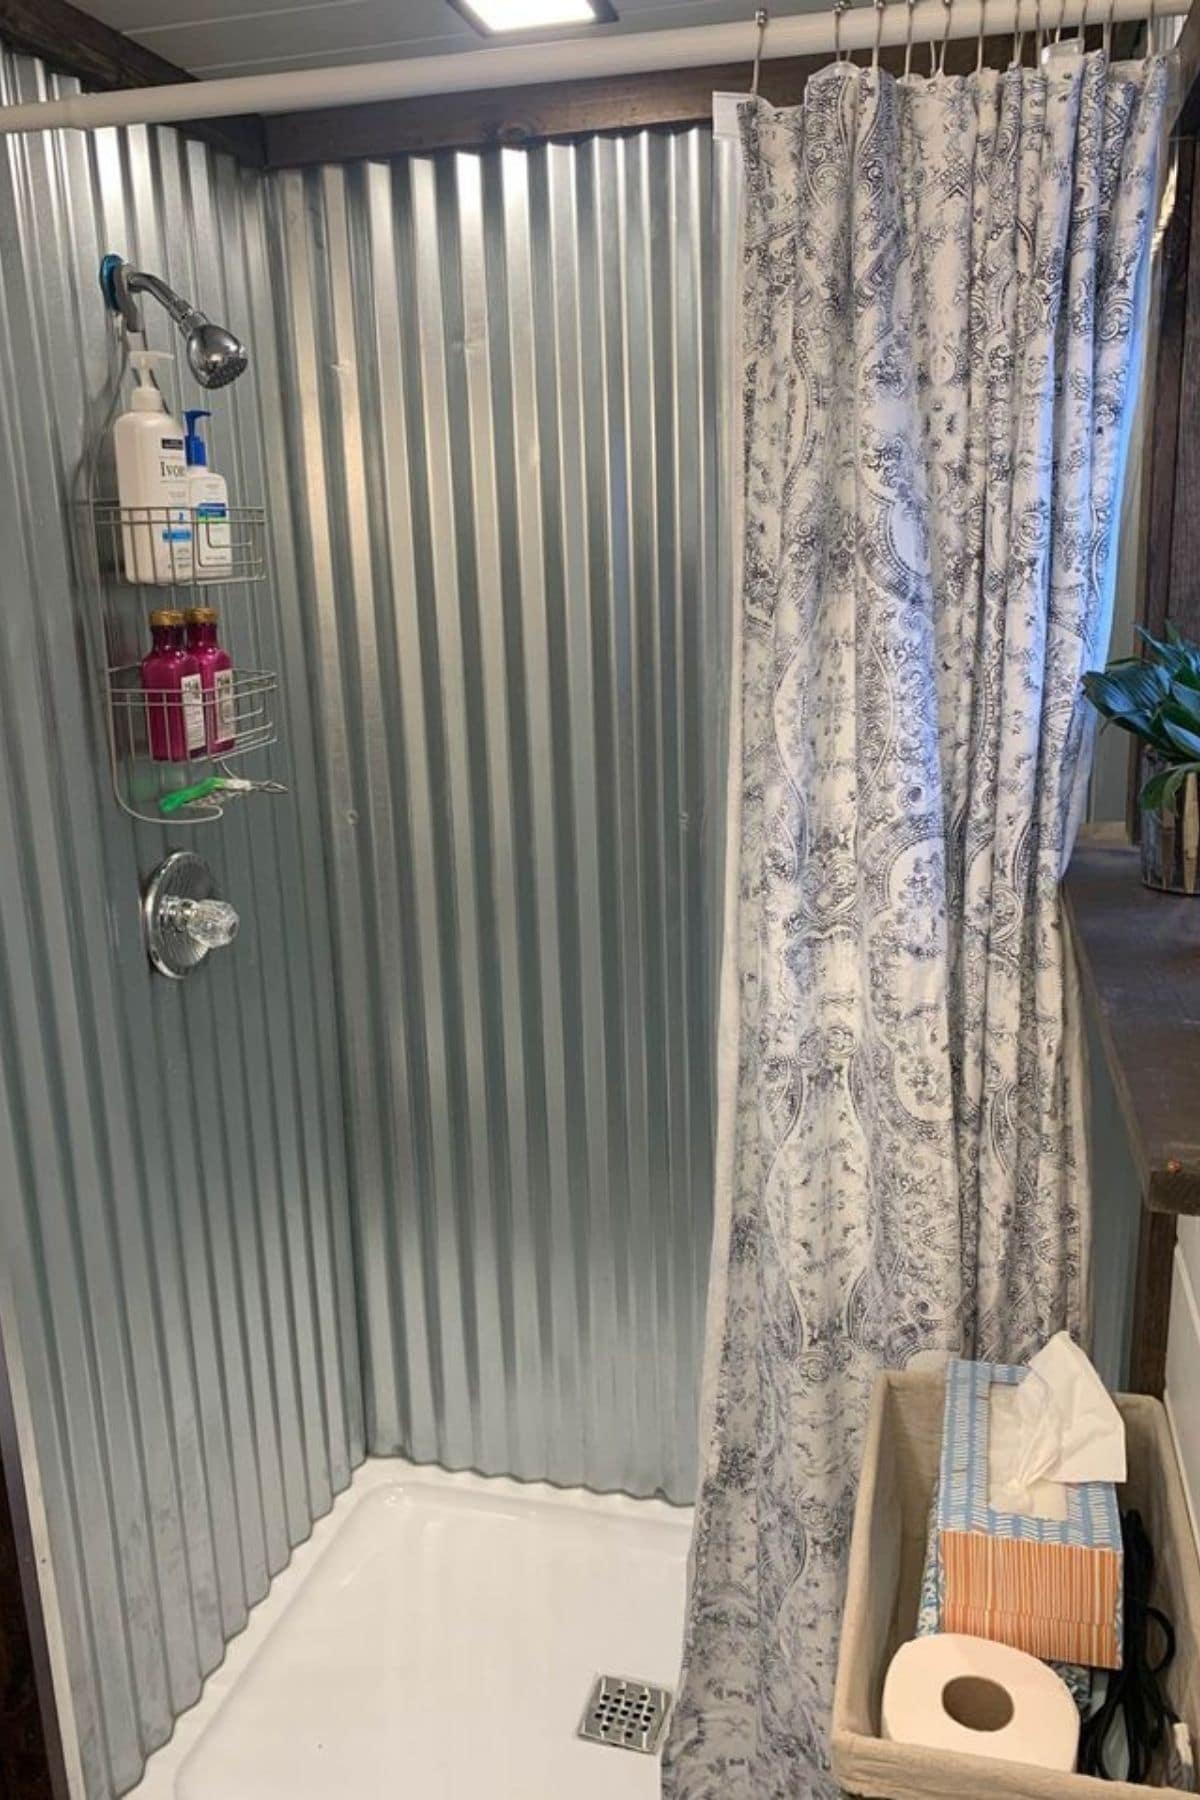 Corrugated metal shower